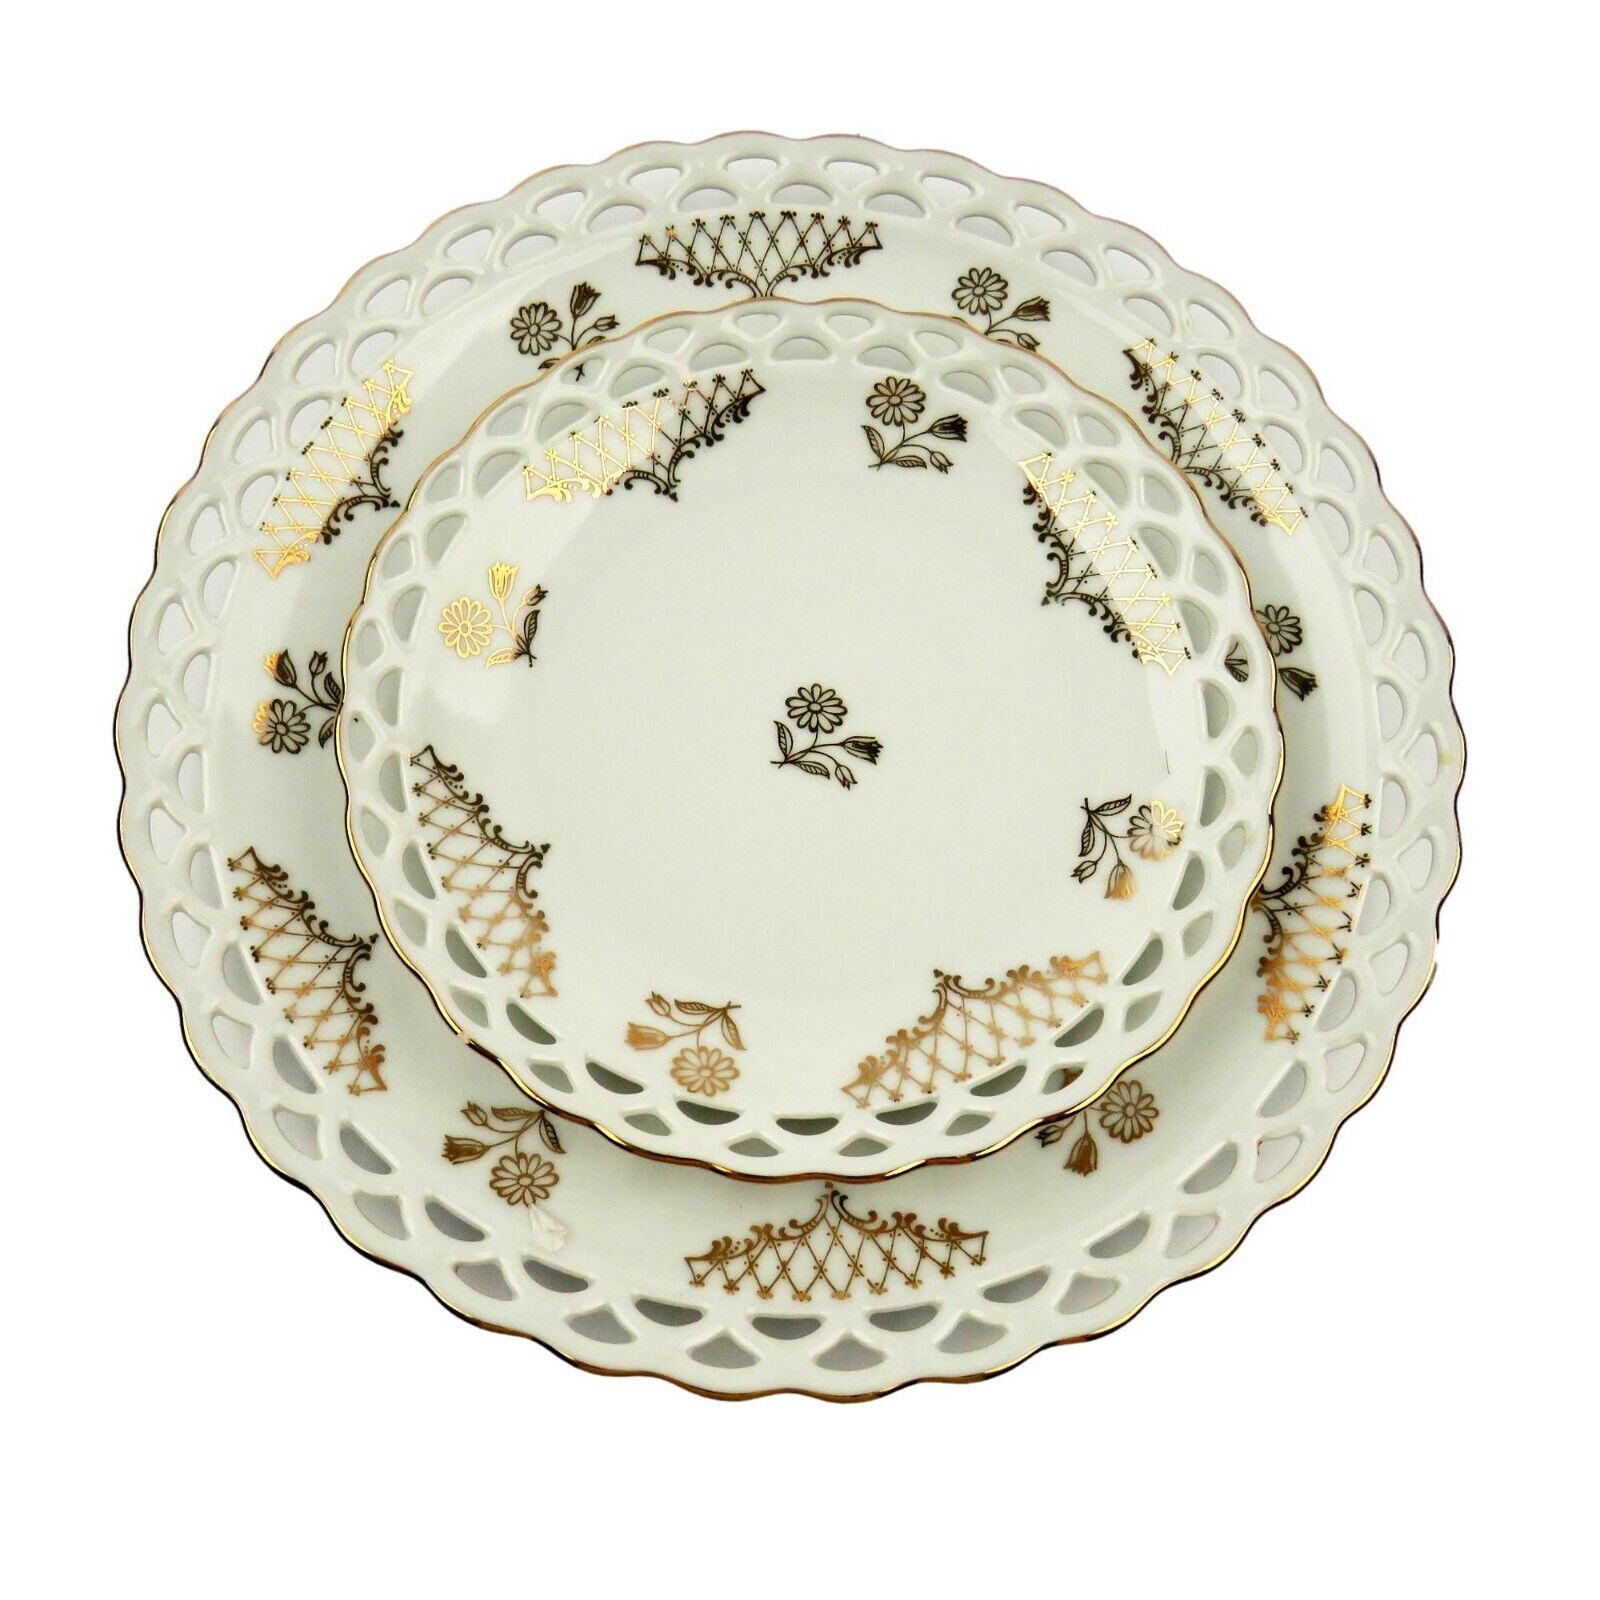  Antique Reticulated Scalloped 2 Dessert Plates Winterling Bavaria Gold Florals